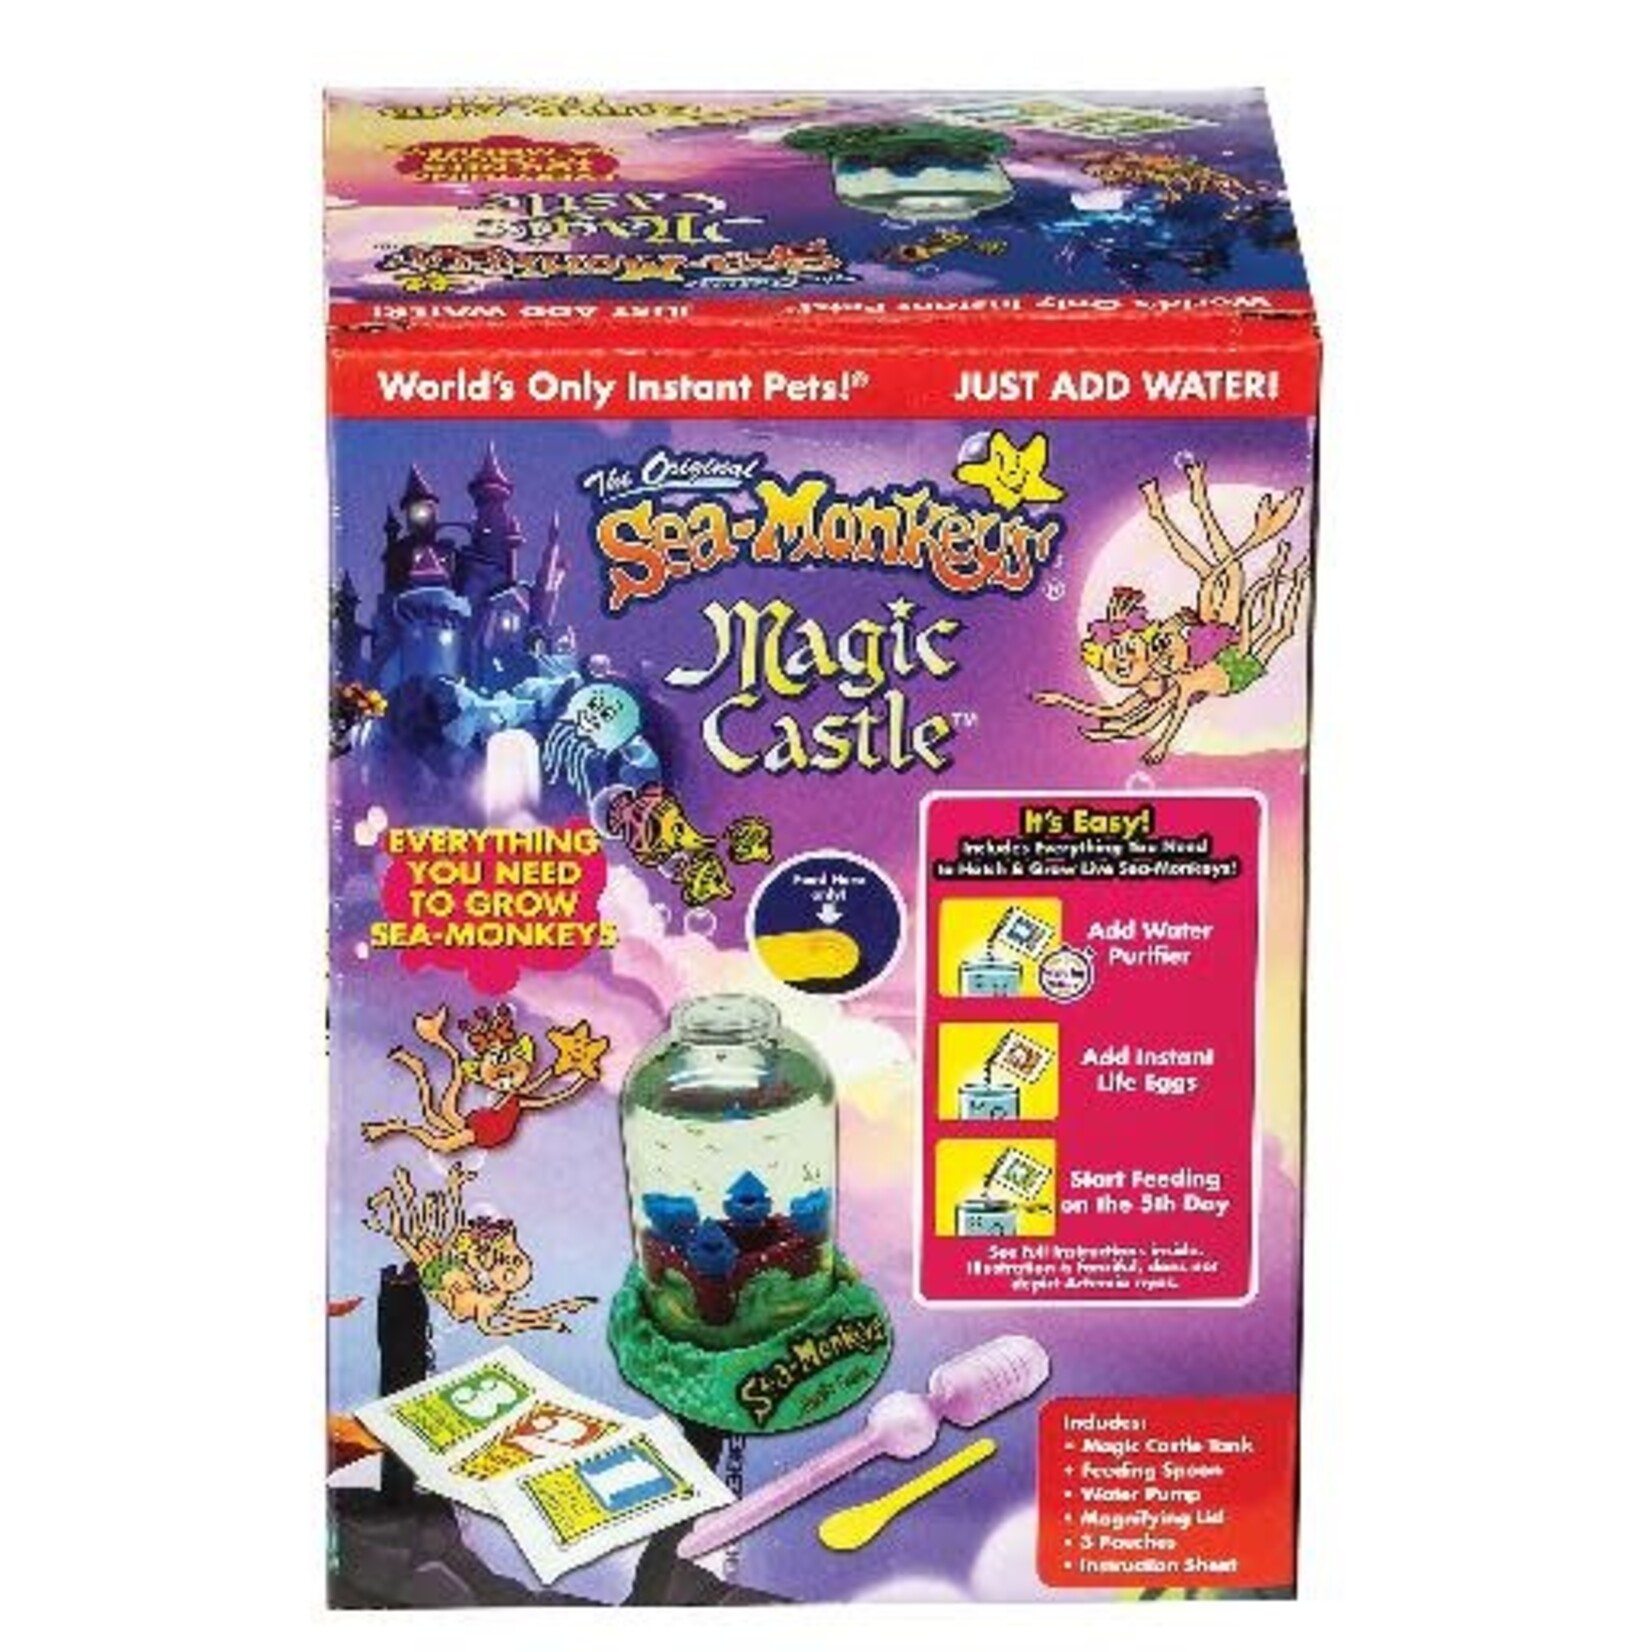 Seamonkeys Magic Castle